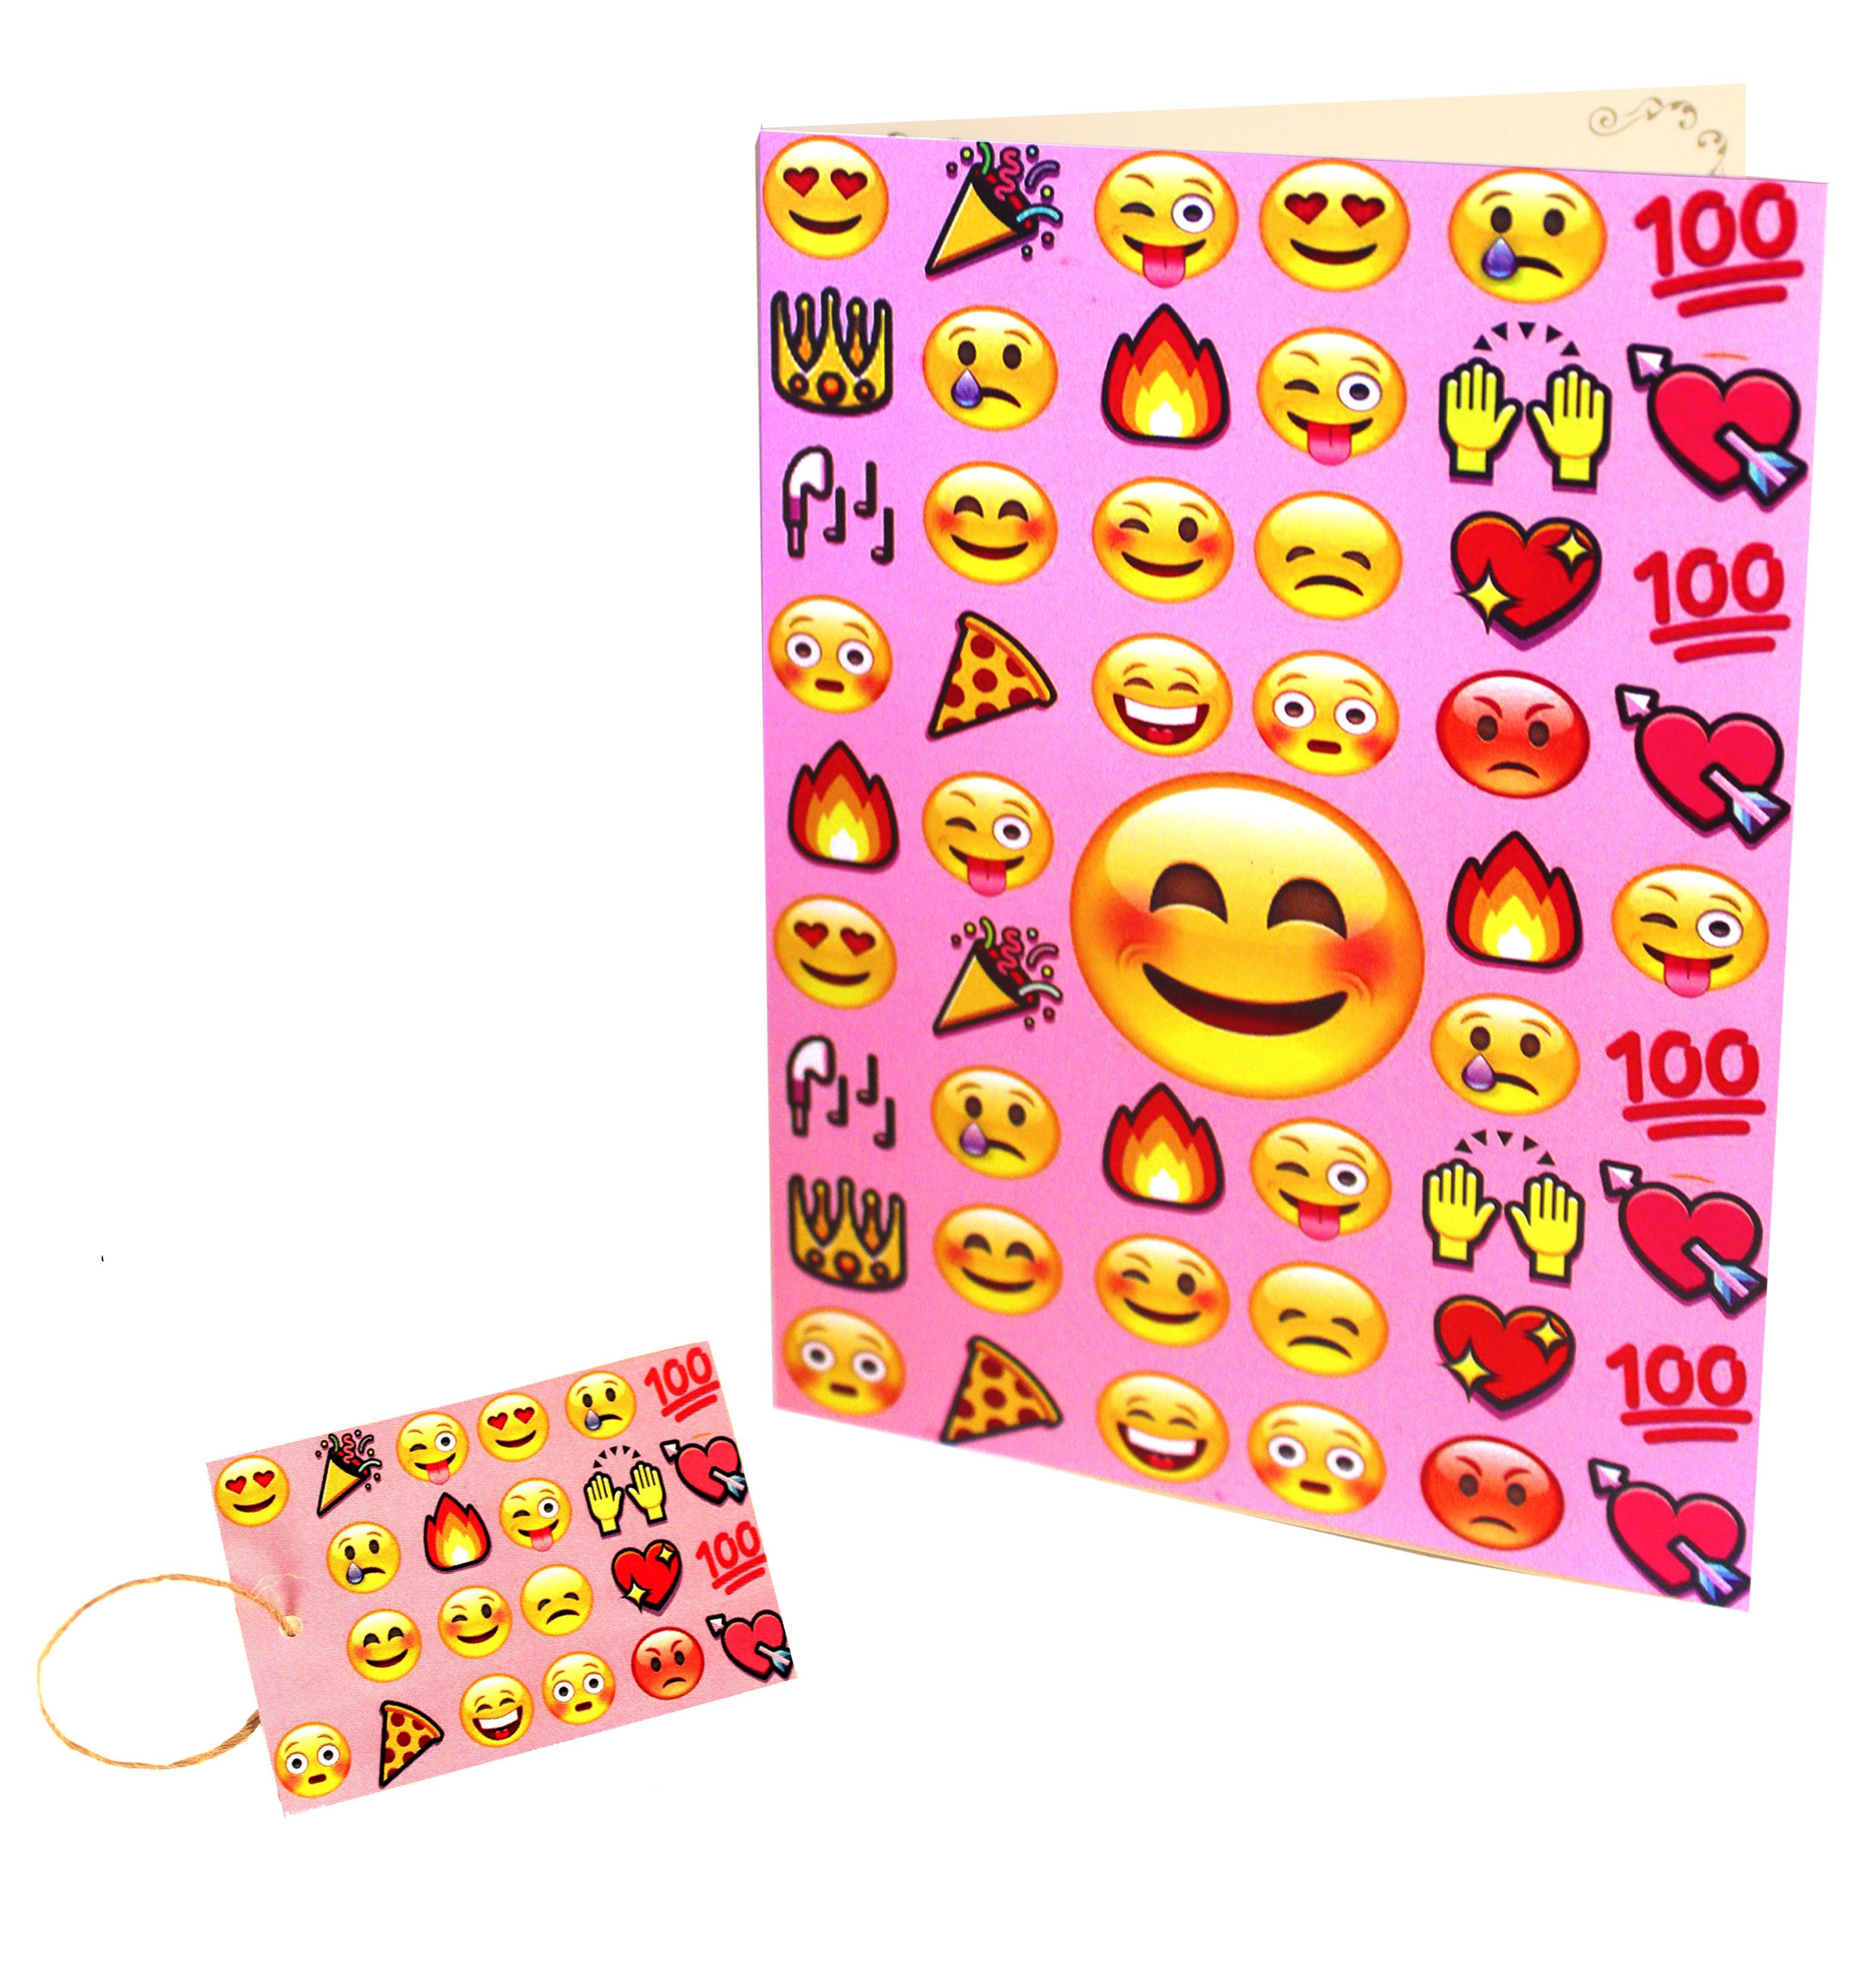 Pink Emoji Greeting Card with gift tag